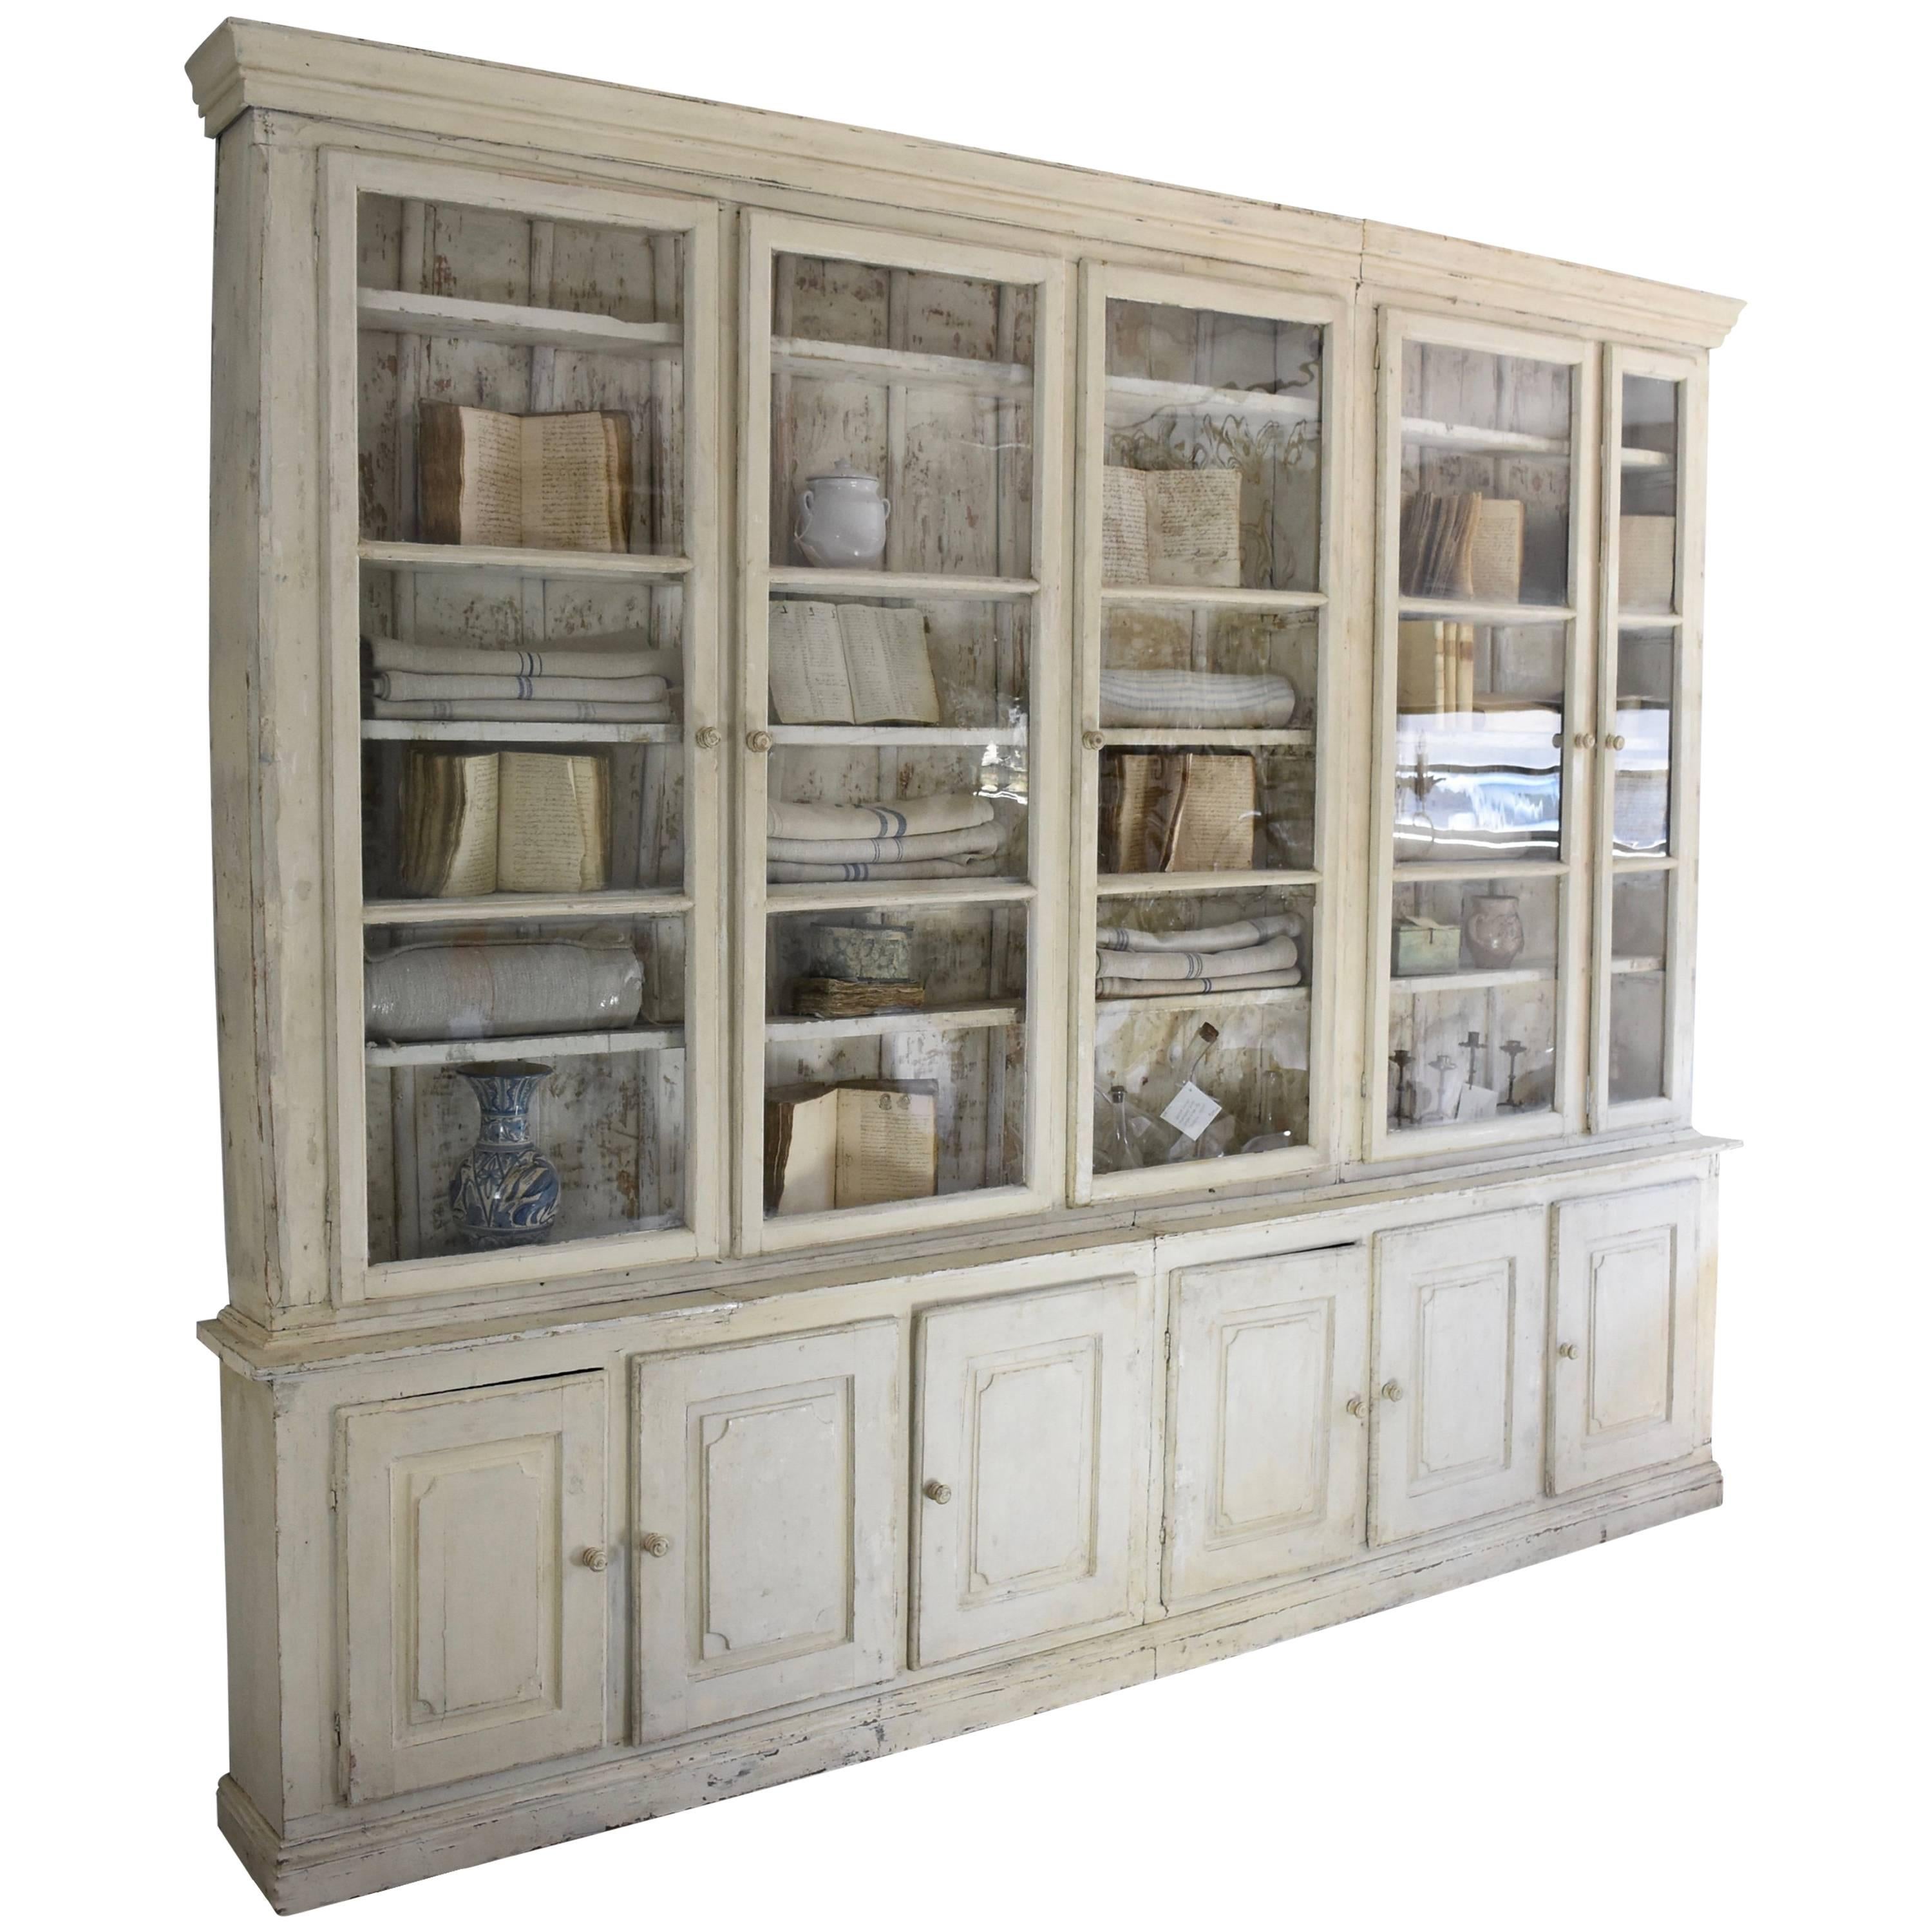 Spanish 18th Century Pharmacy Cabinet Painted in Creamy White